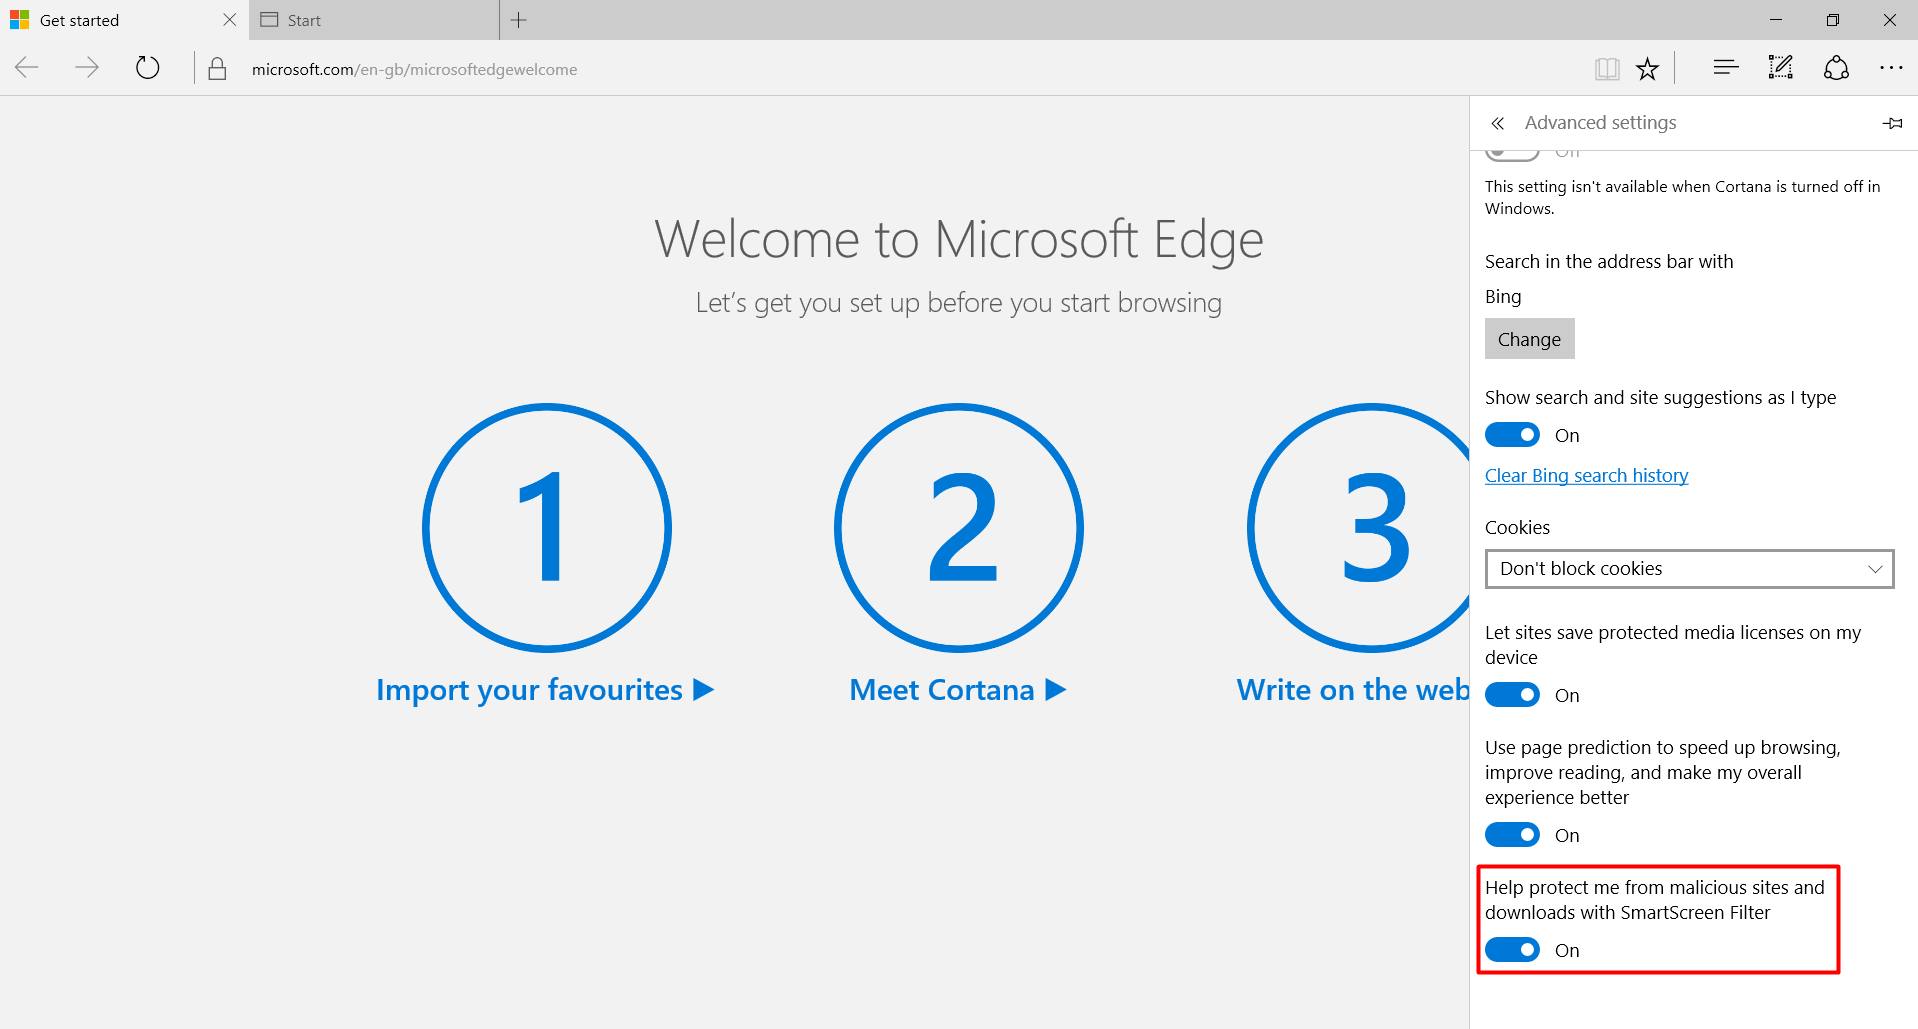 Windows 10 Security Guide - Microsoft Edge SmartScreen Filter